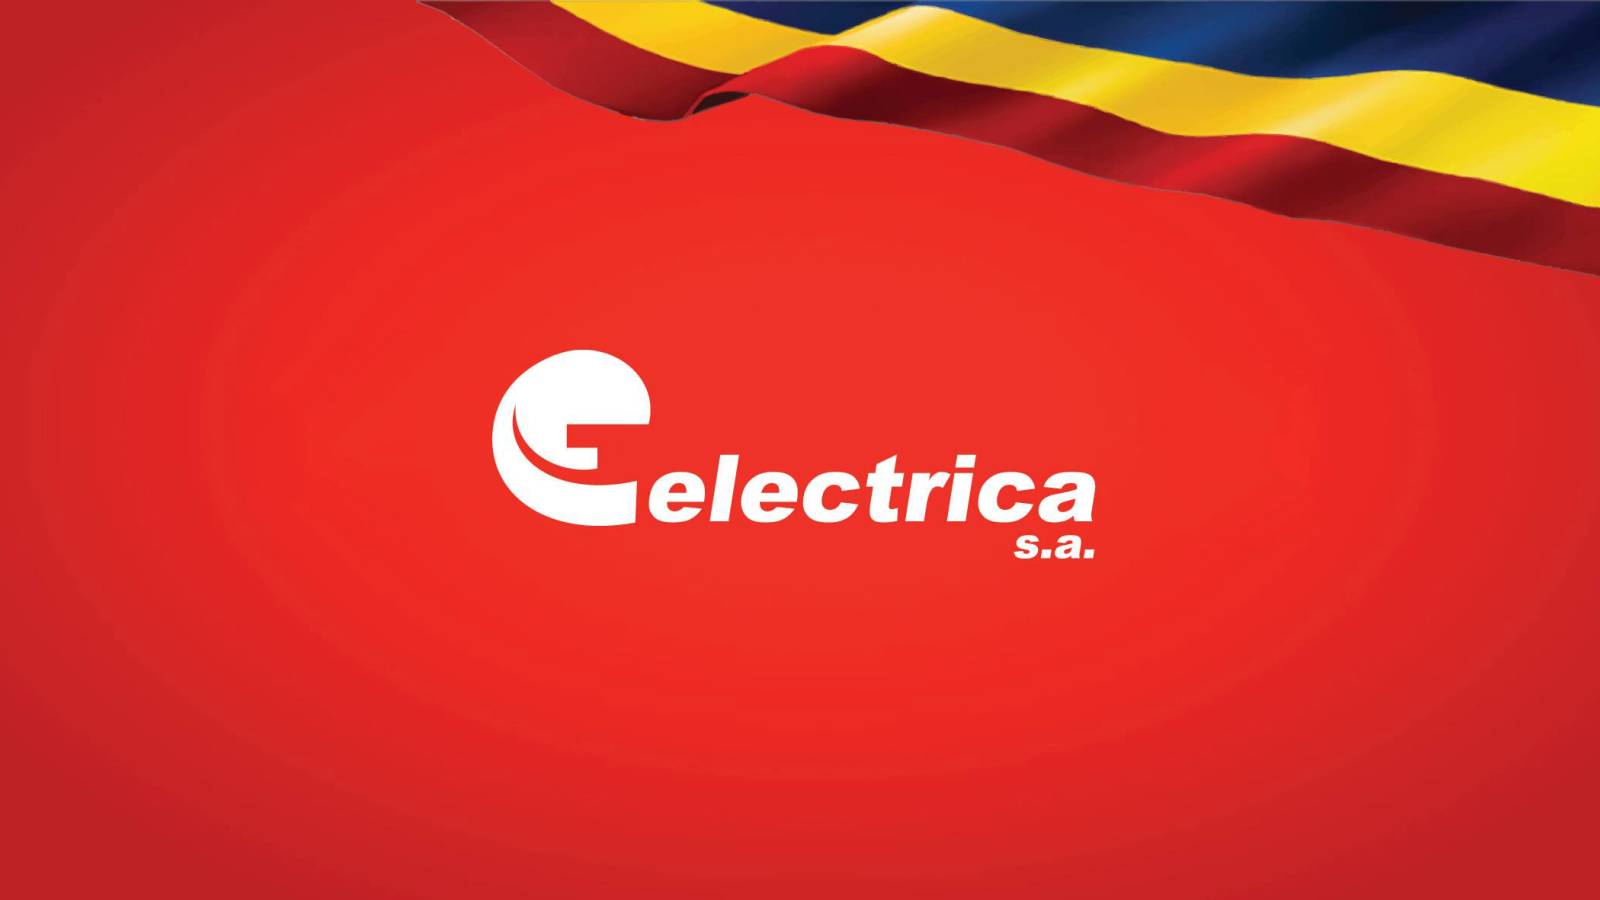 Electrica Masura Oficiala ULTIMA ORA Impusa Clientii Romania